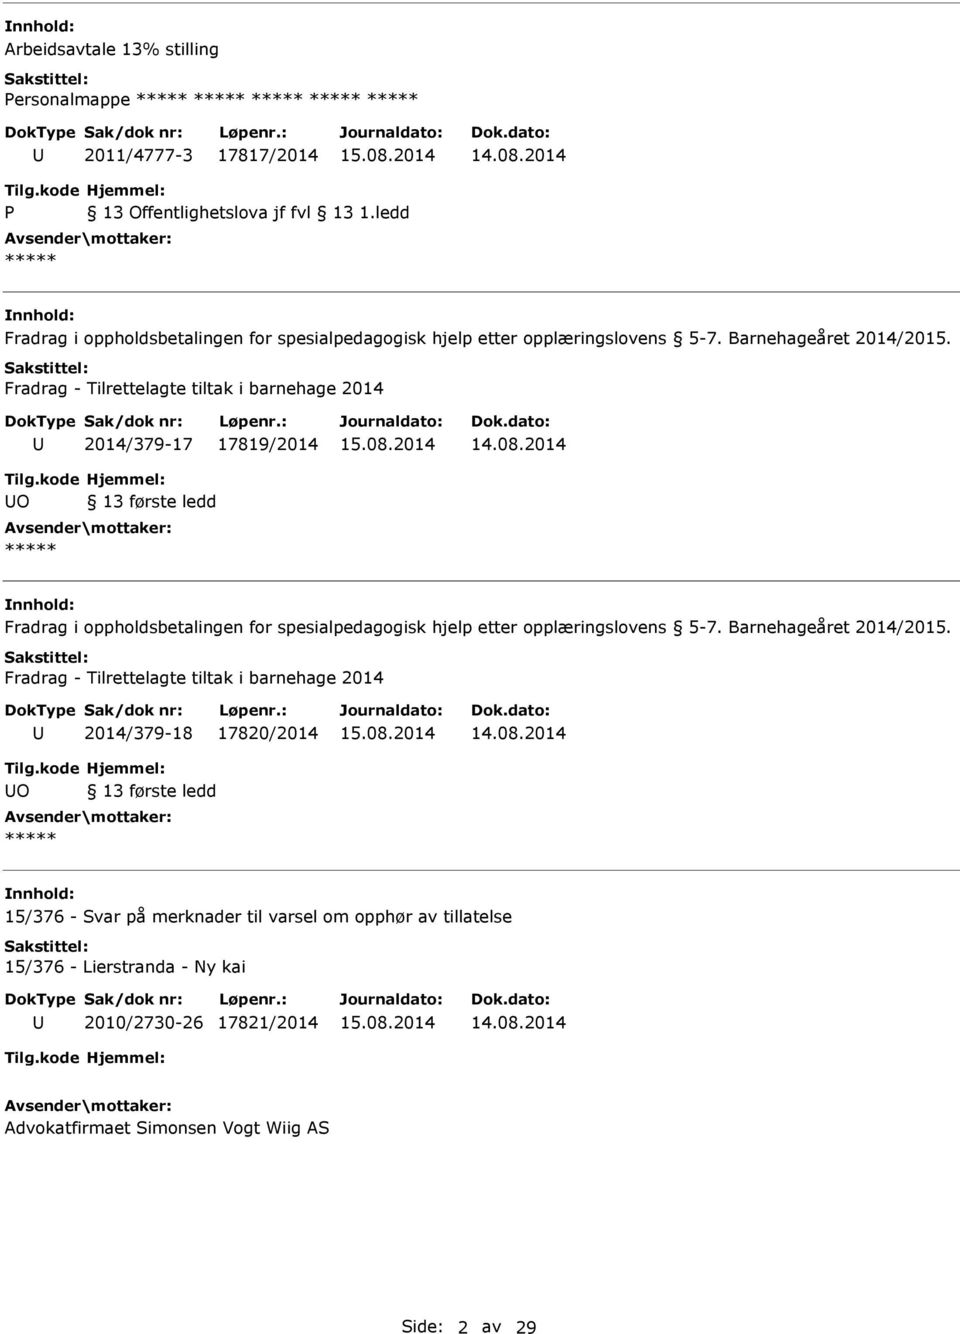 merknader til varsel om opphør av tillatelse 15/376 - Lierstranda - Ny